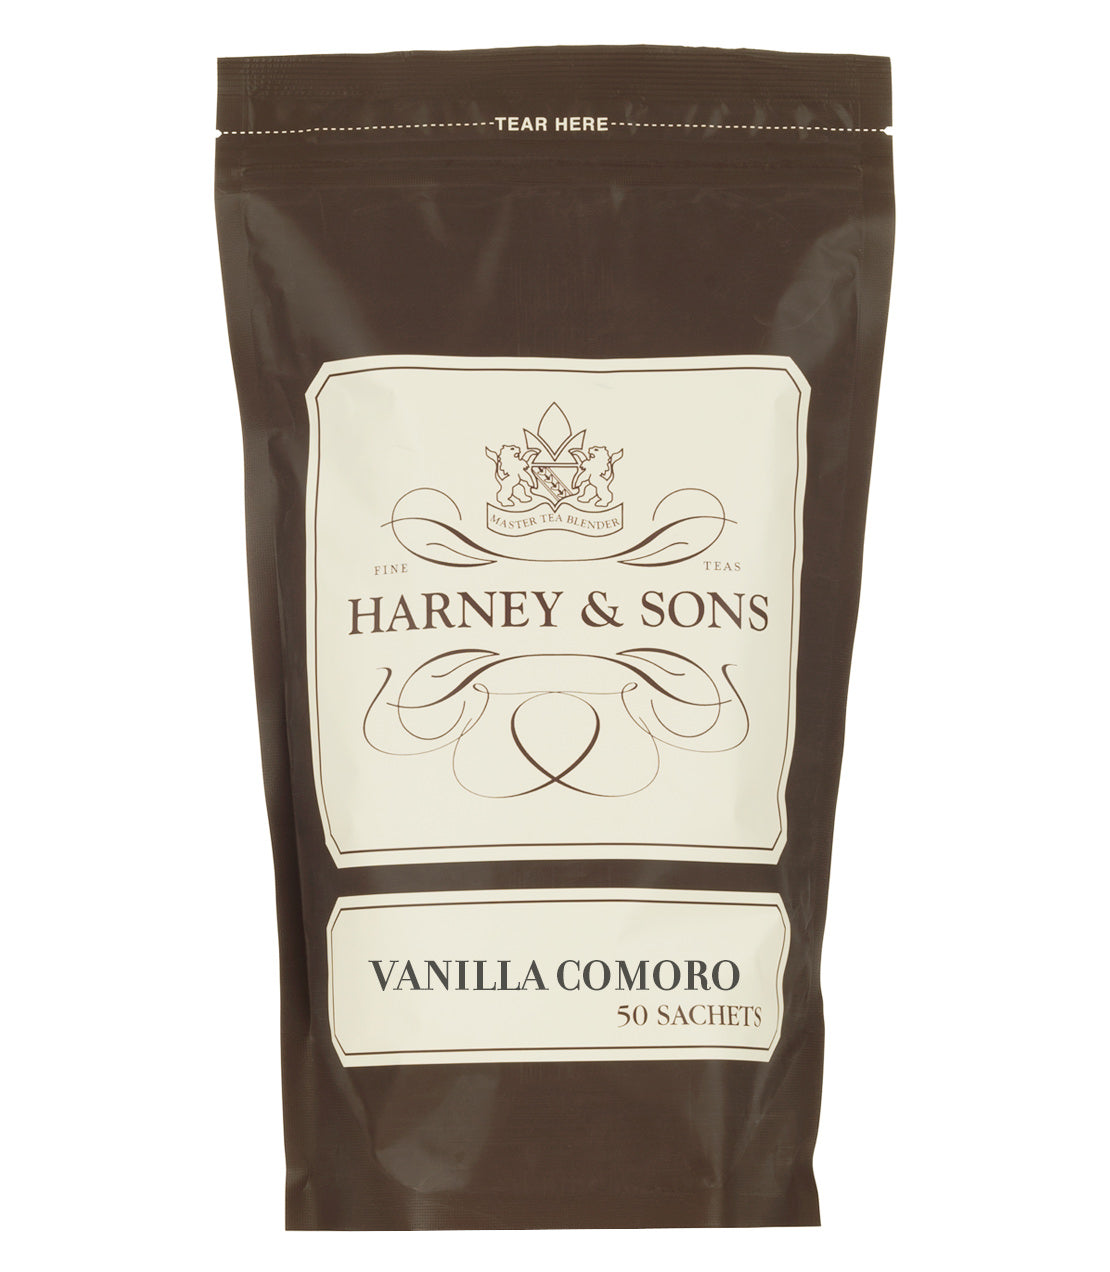 Decaf Vanilla Comoro - Sachets Bag of 50 Sachets - Harney & Sons Fine Teas